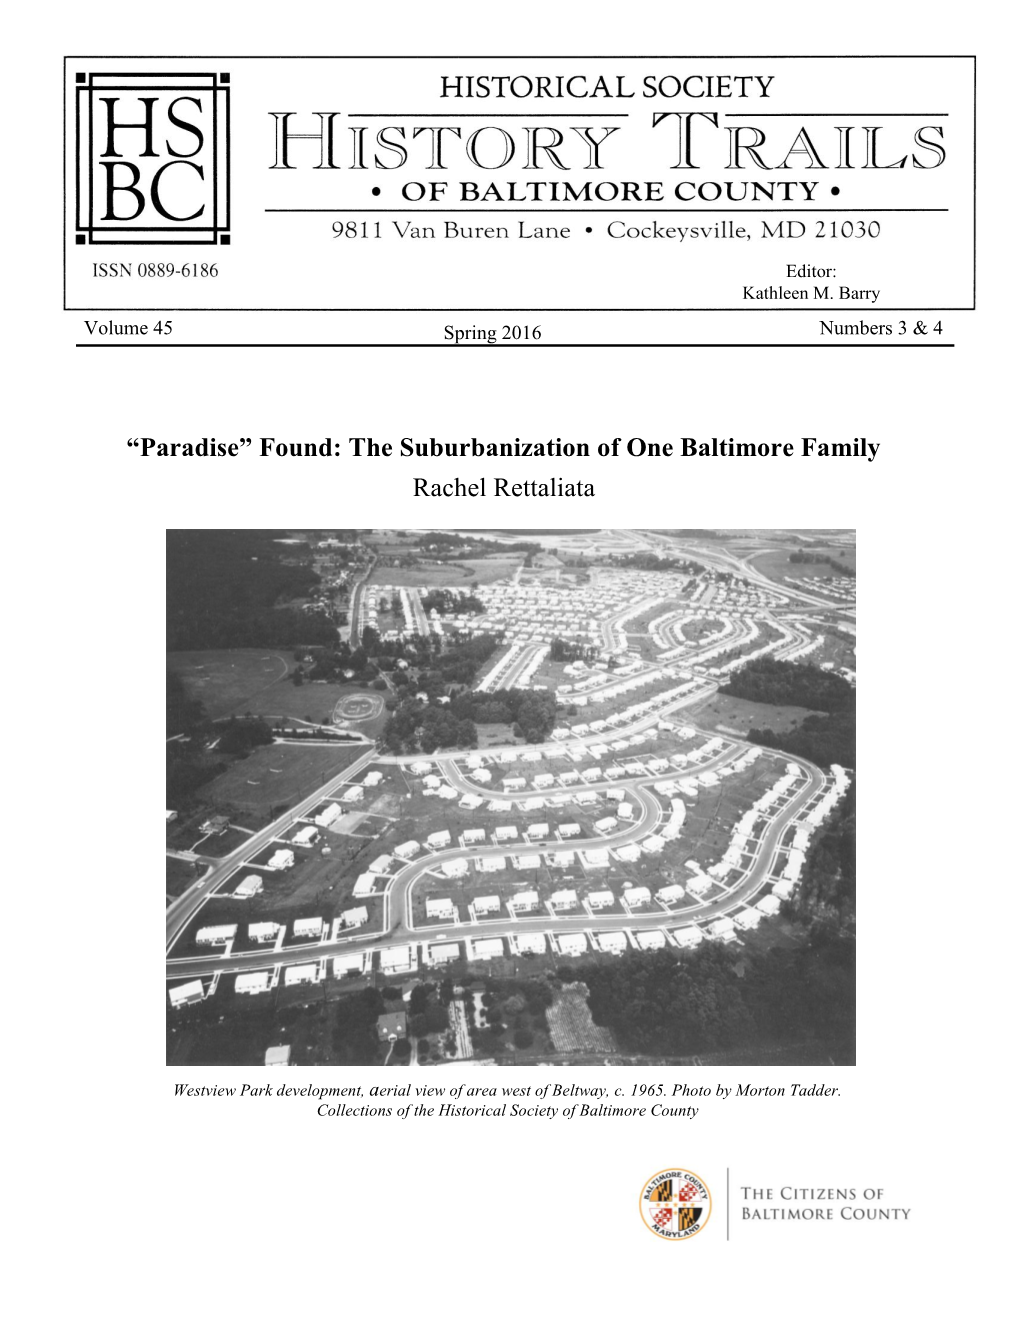 “Paradise” Found: the Suburbanization of One Baltimore Family Rachel Rettaliata